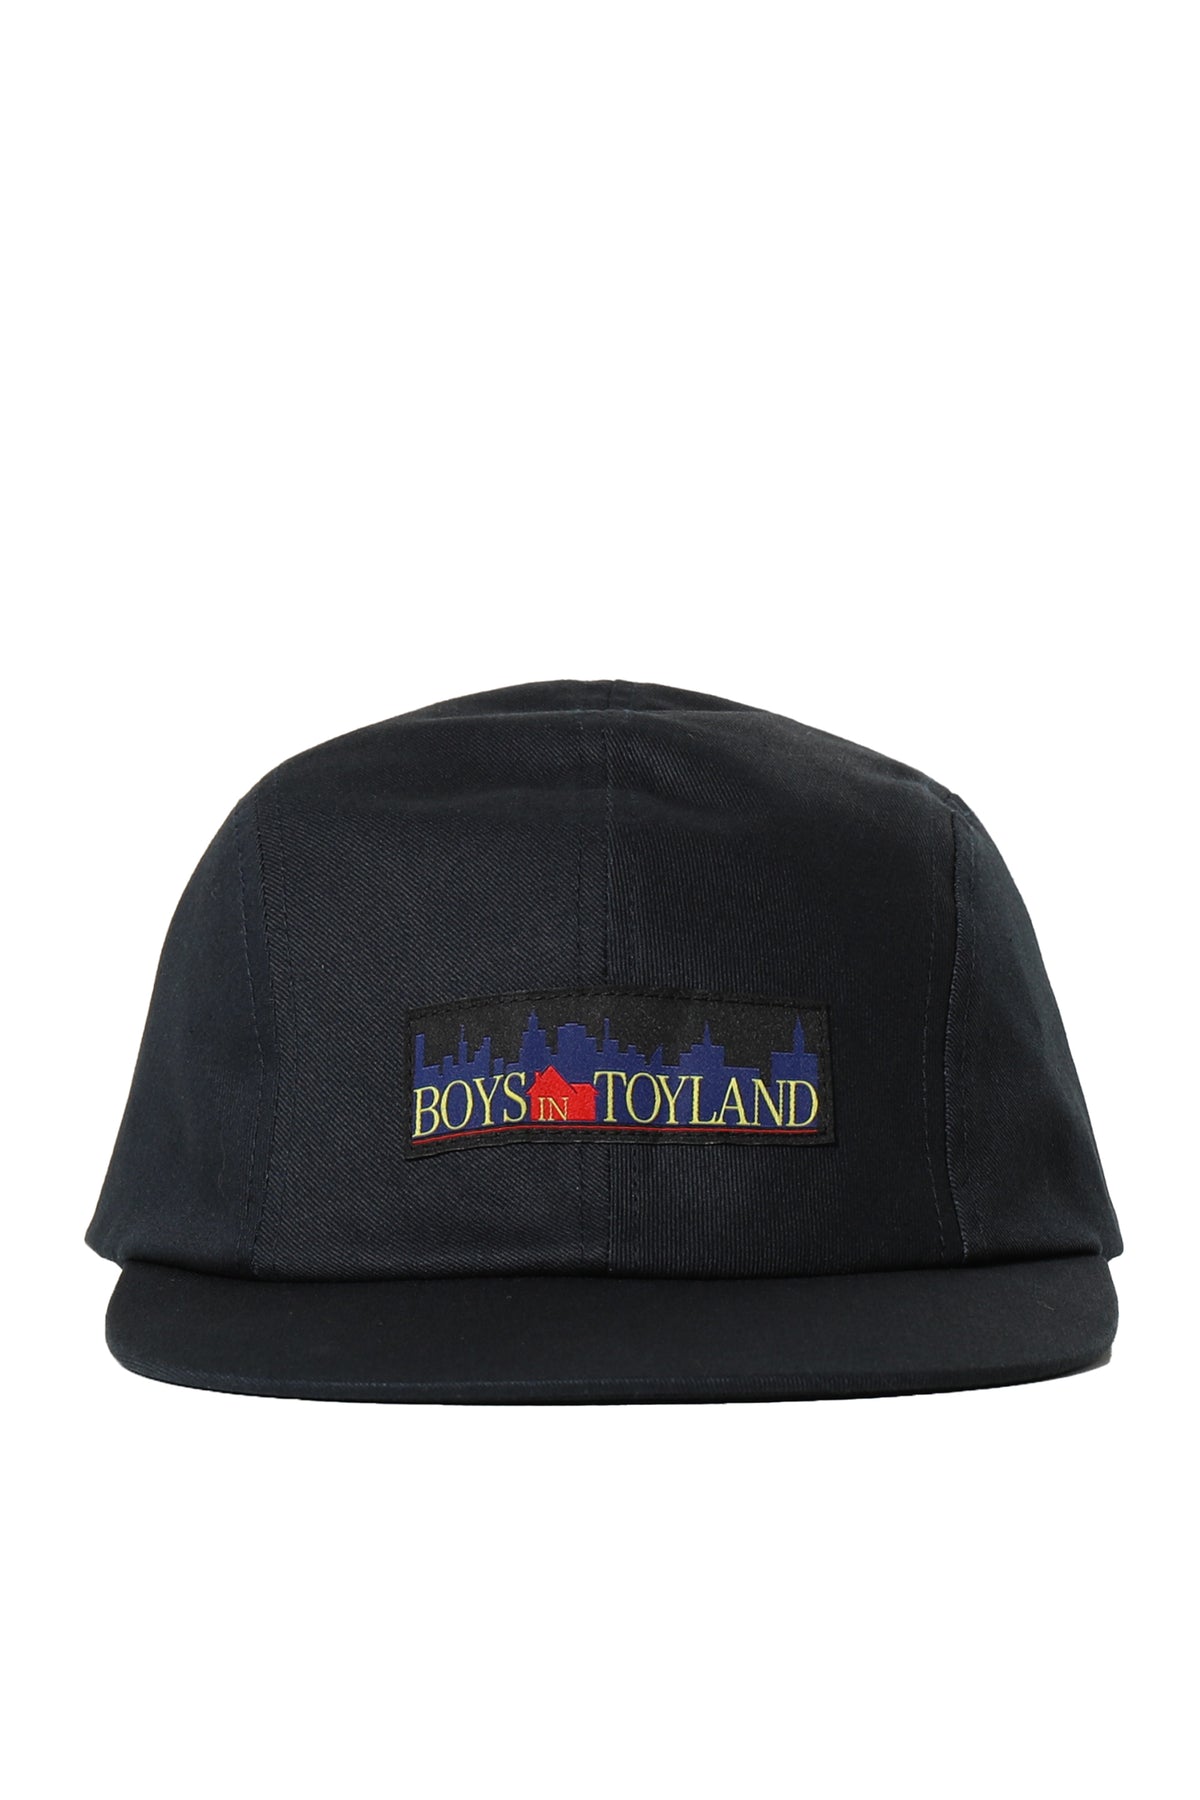 BOYS IN TOYLAND CITY LOGO CAMPER CAP / NVY